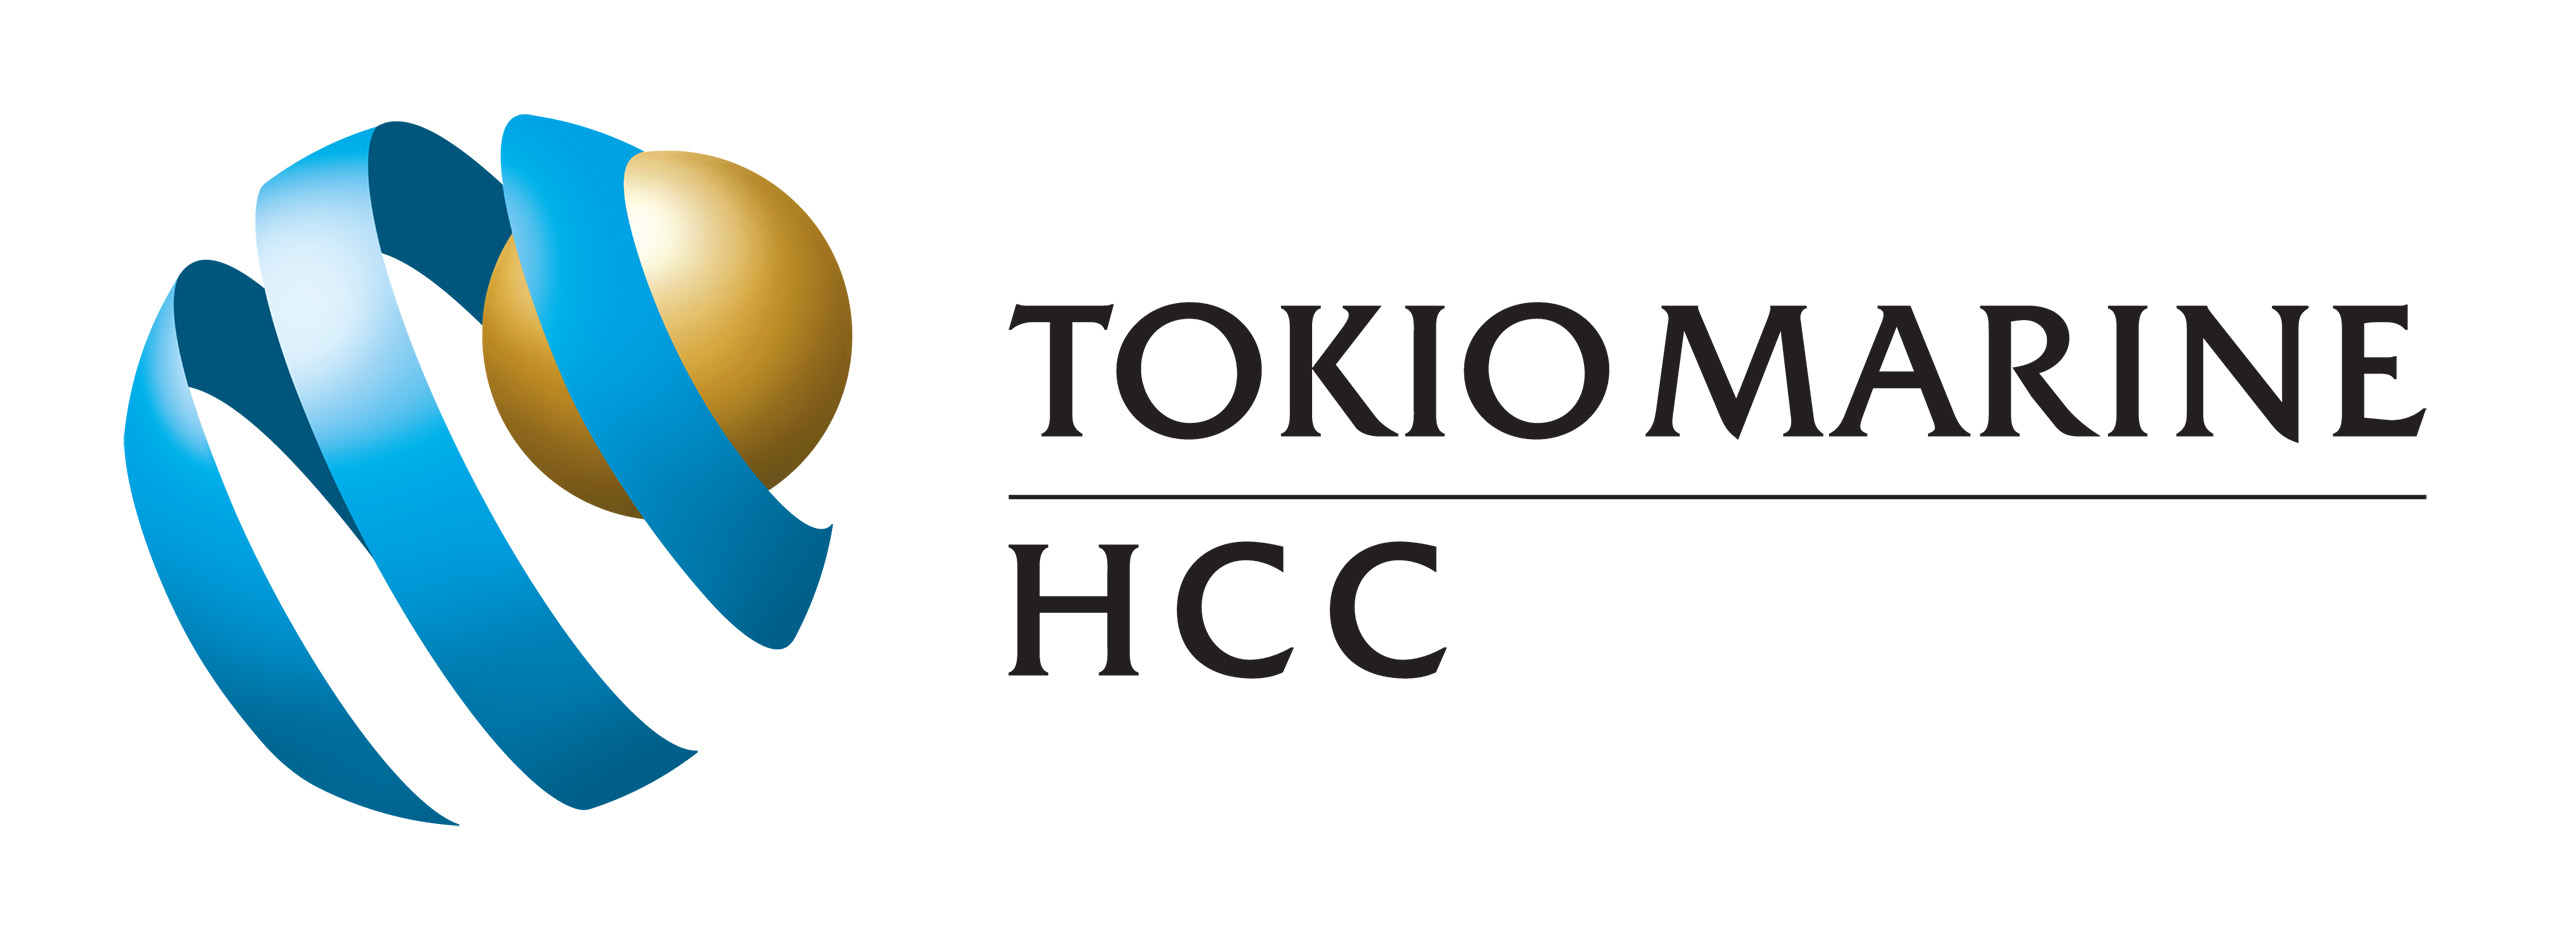 Tokio Marine HCC Logo